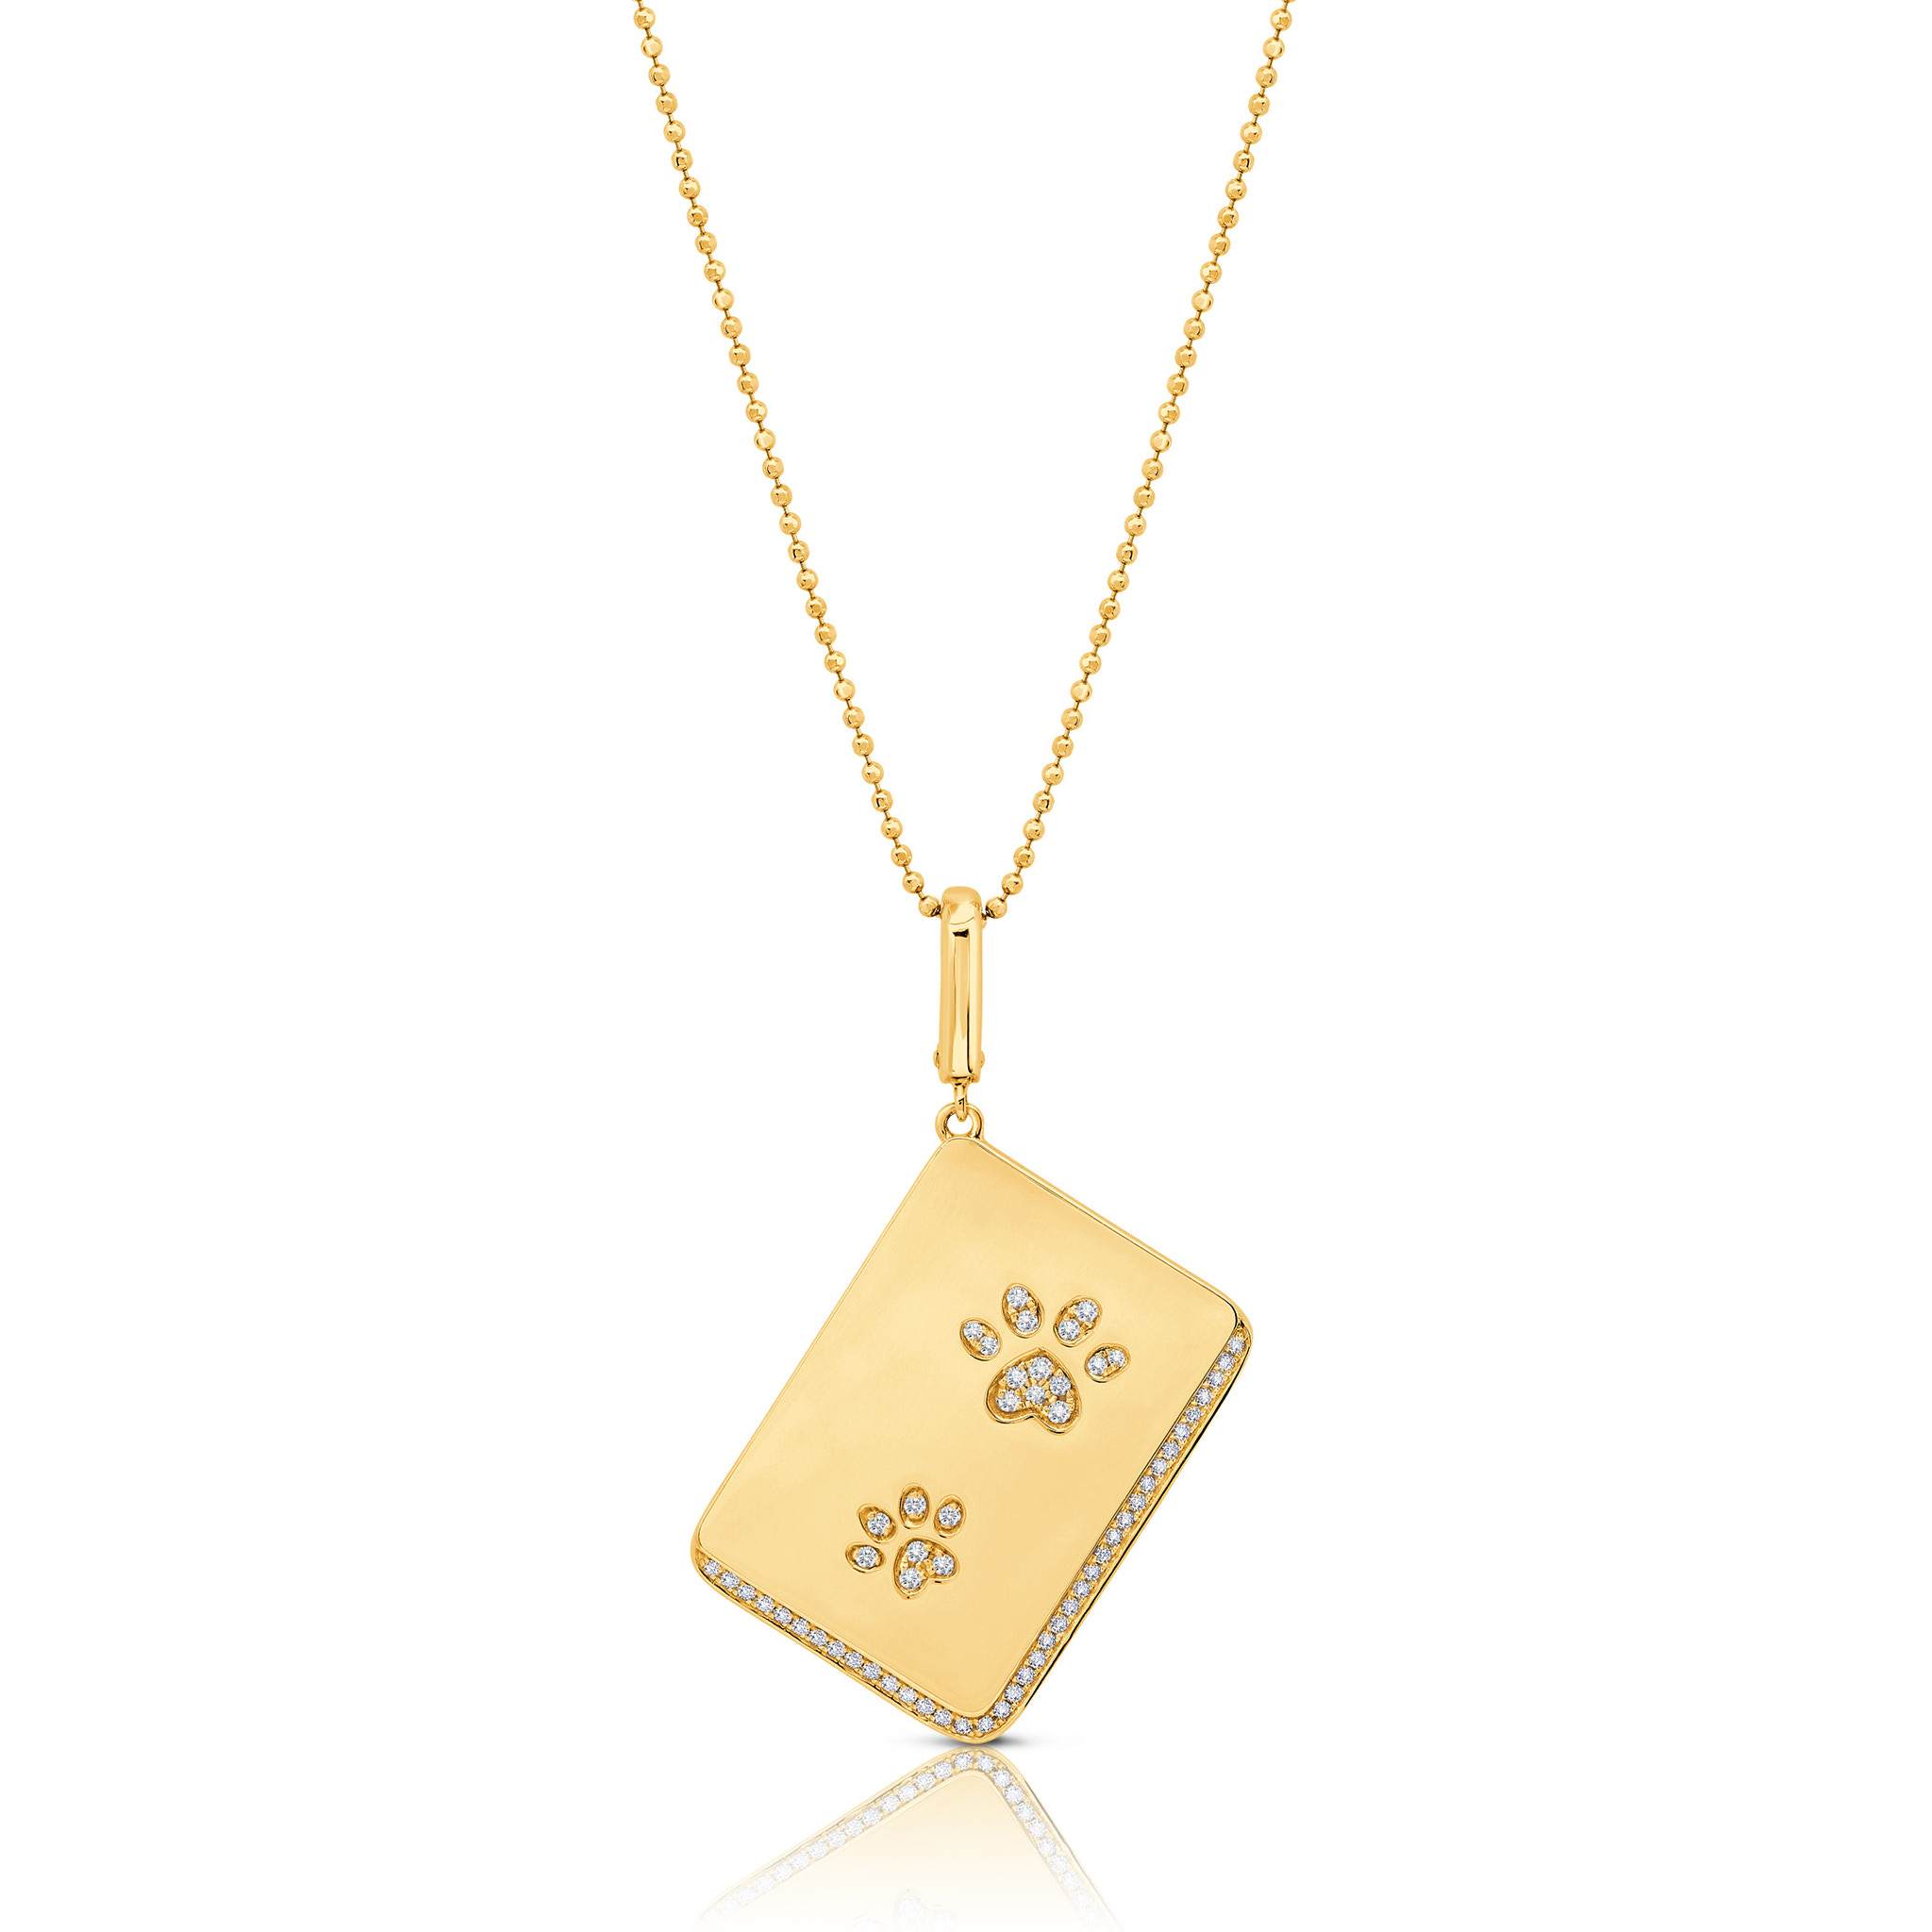 Graziela Gems - Necklace - Diamond Dog Paw Rectangle Pendant - Yellow Gold 14K Diamond